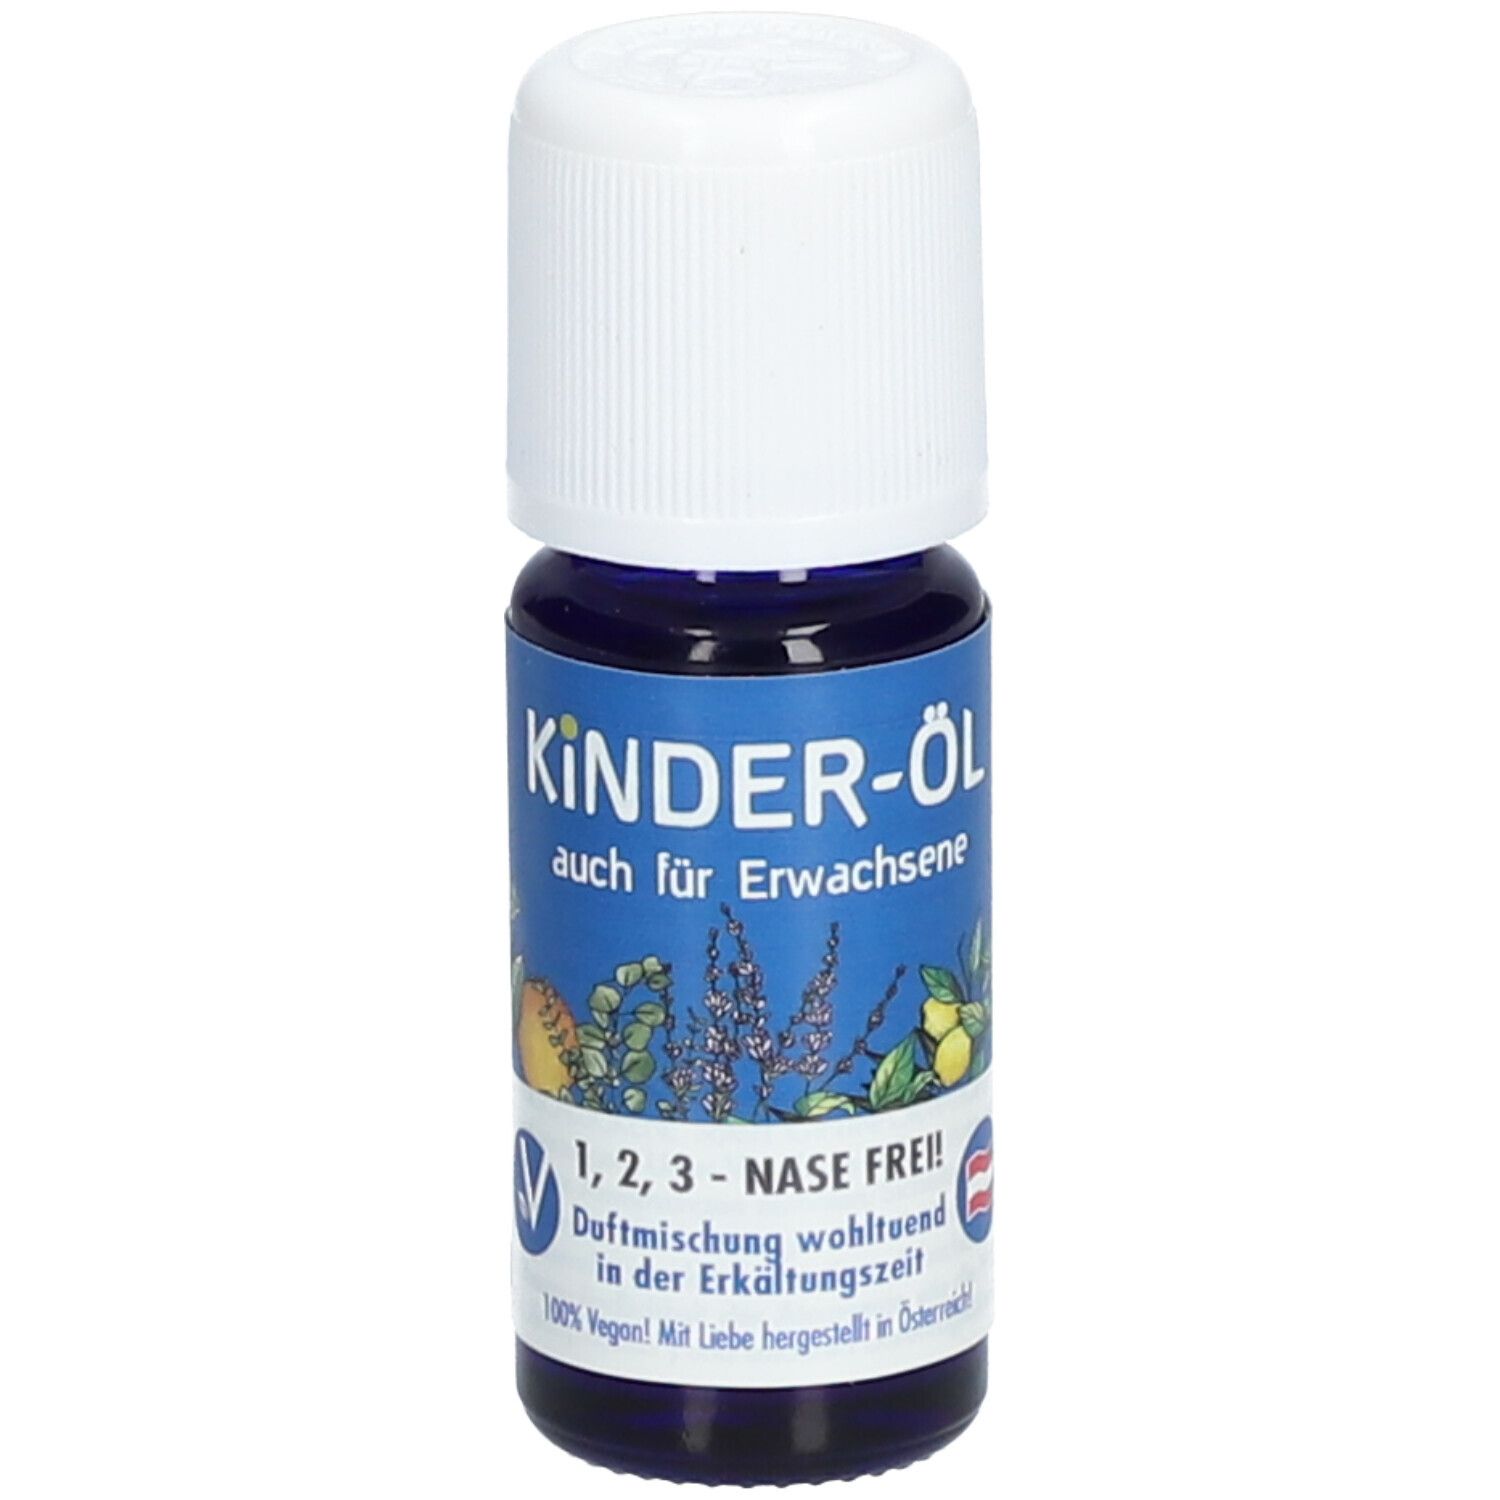 Kozbach children's oil